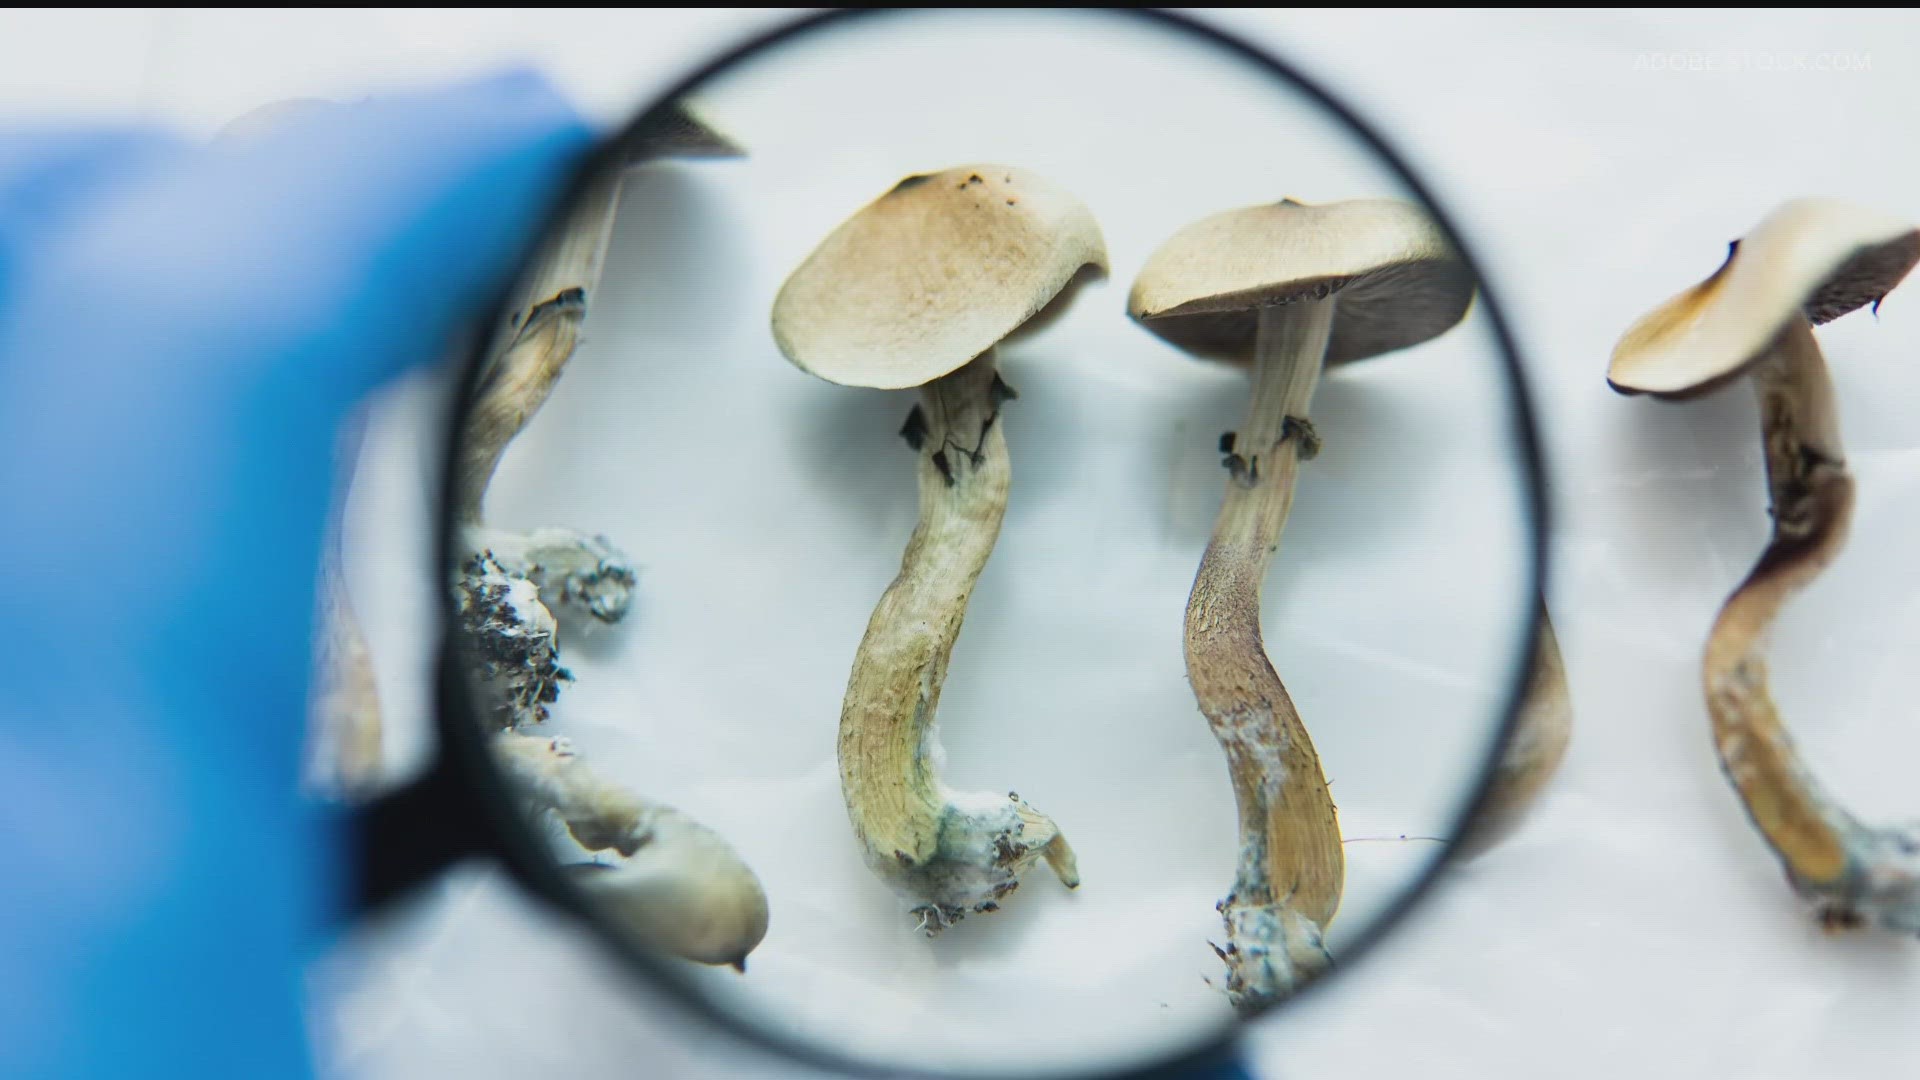 Mpls deprioritizes enforcement of entheogenic plants, mushrooms